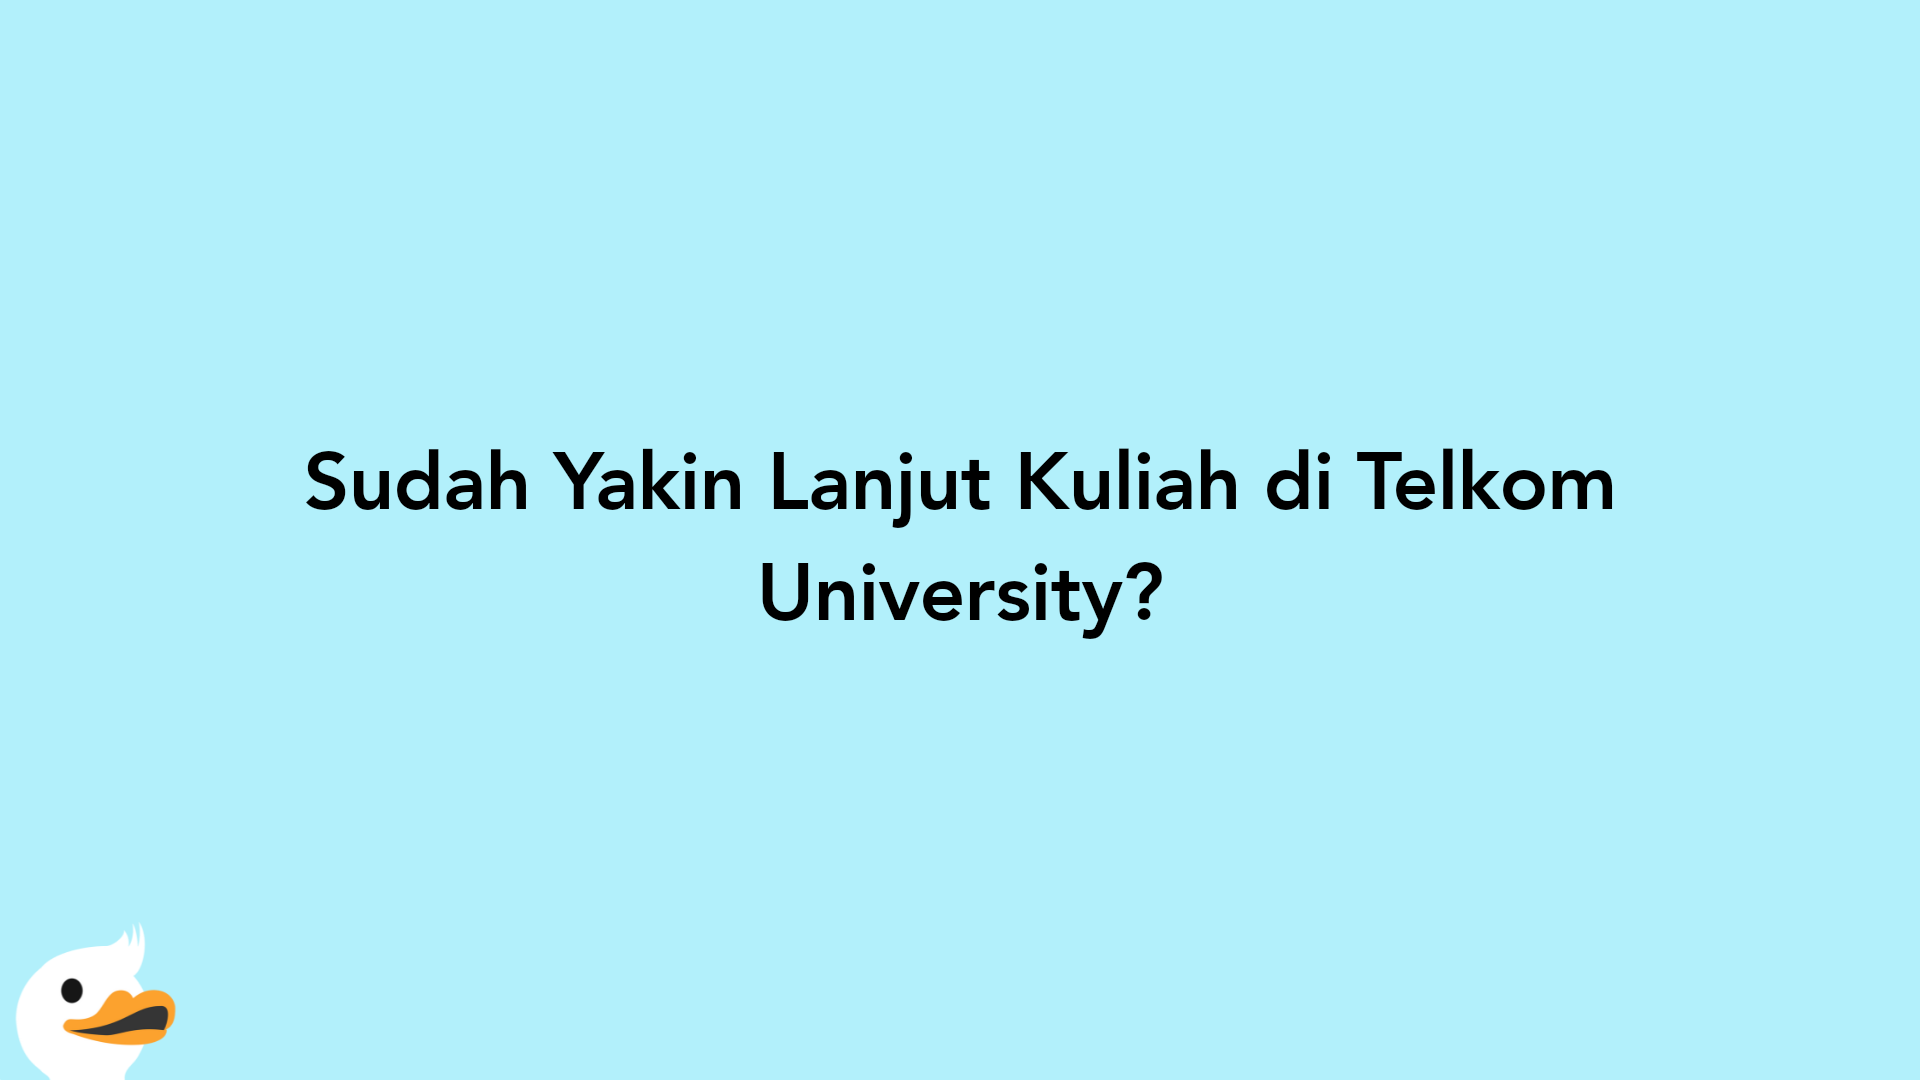 Sudah Yakin Lanjut Kuliah di Telkom University?